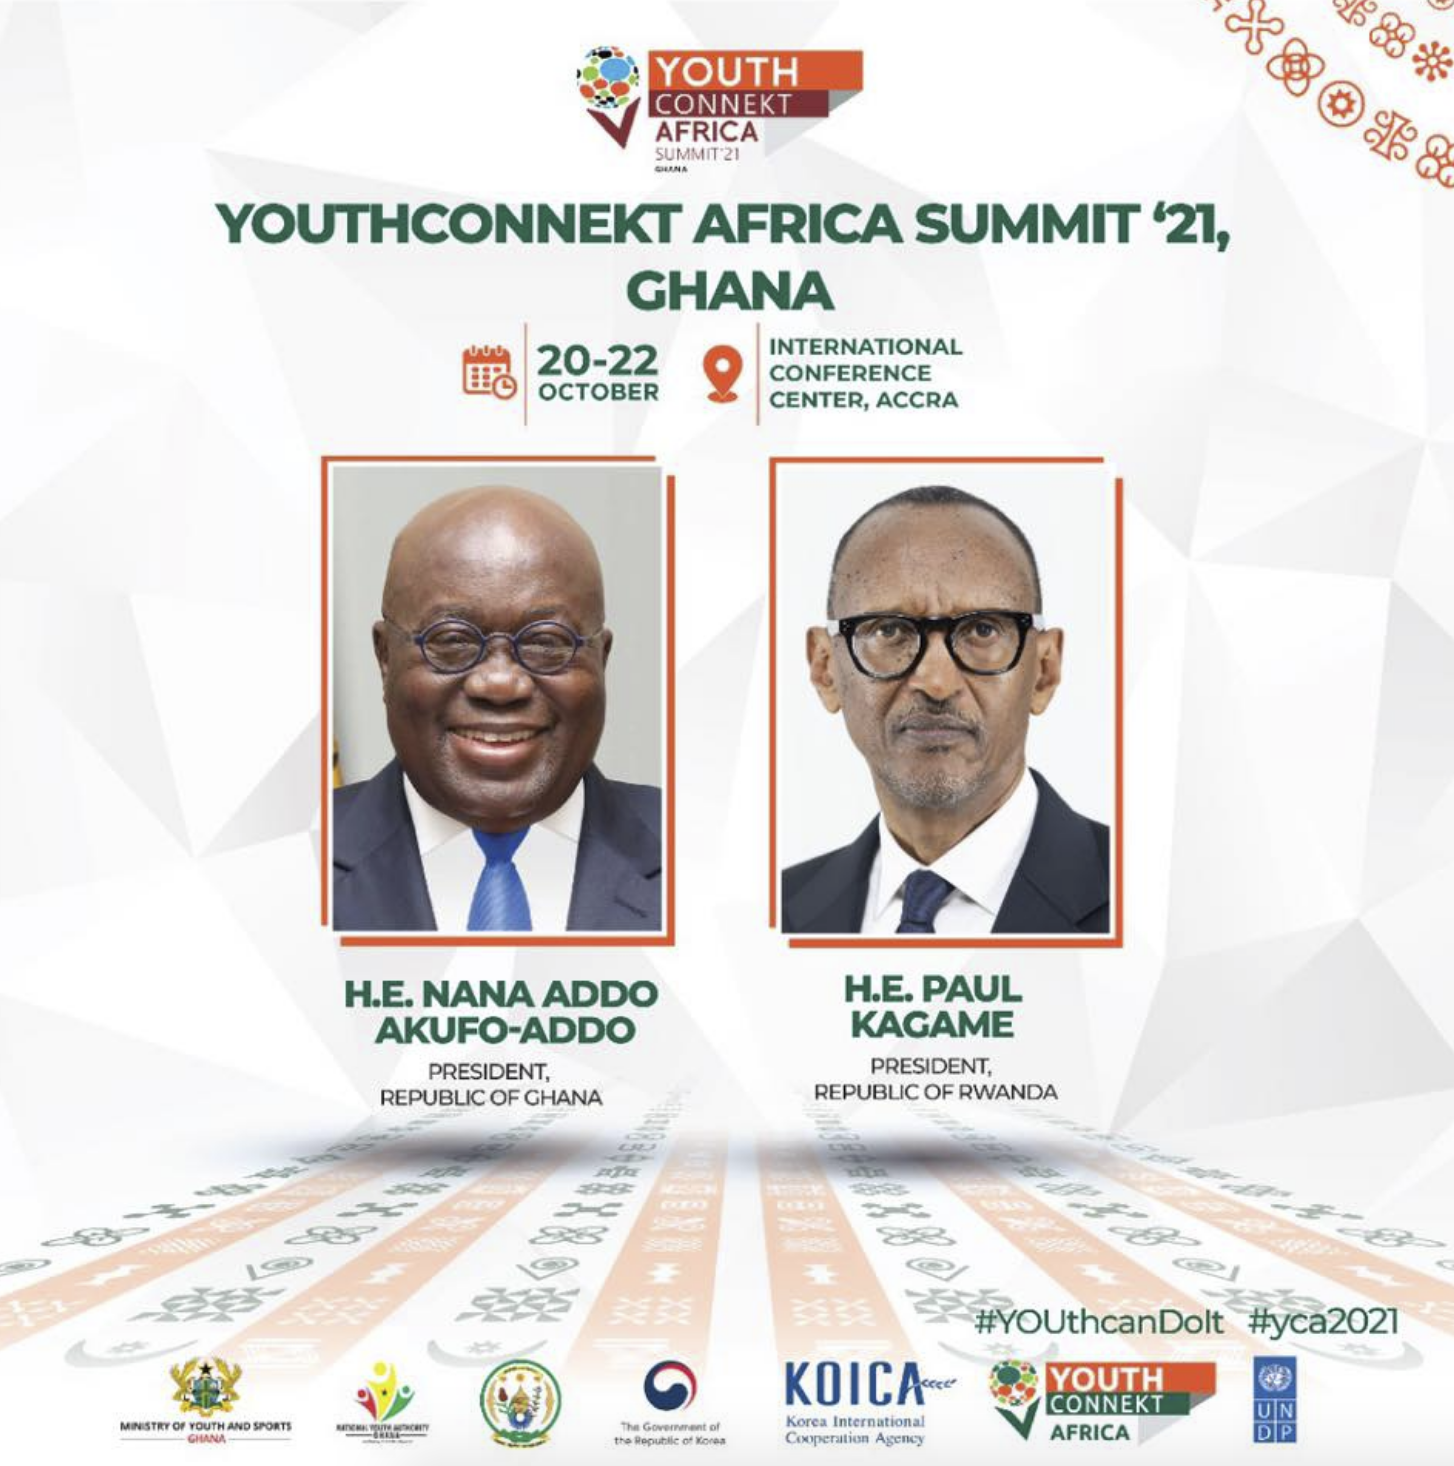 Cimeira da Jeventude Connekt Africa